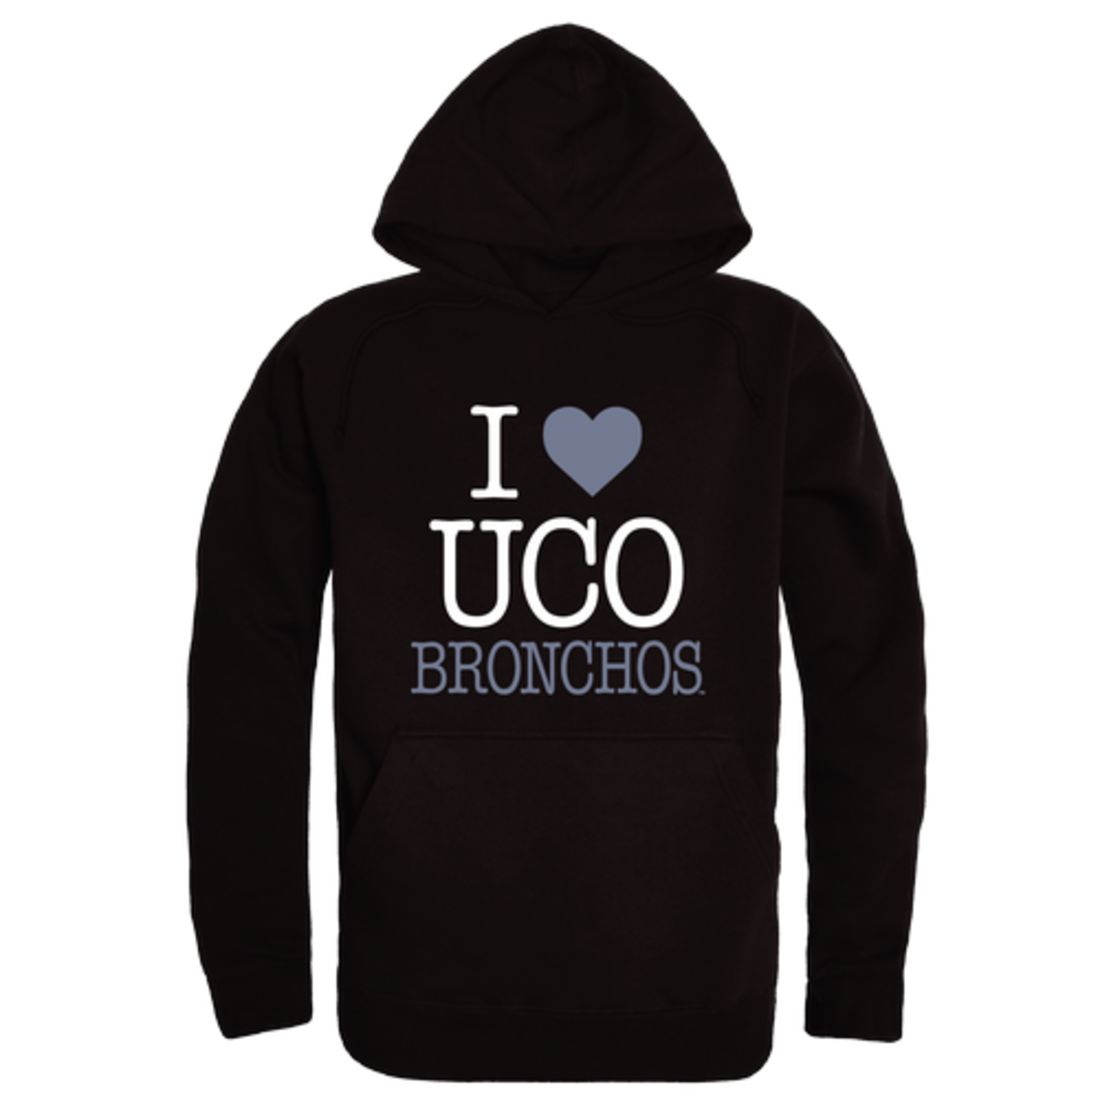 I-Love-University-of-Central-Oklahoma-Bronchos-Fleece-Hoodie-Sweatshirts